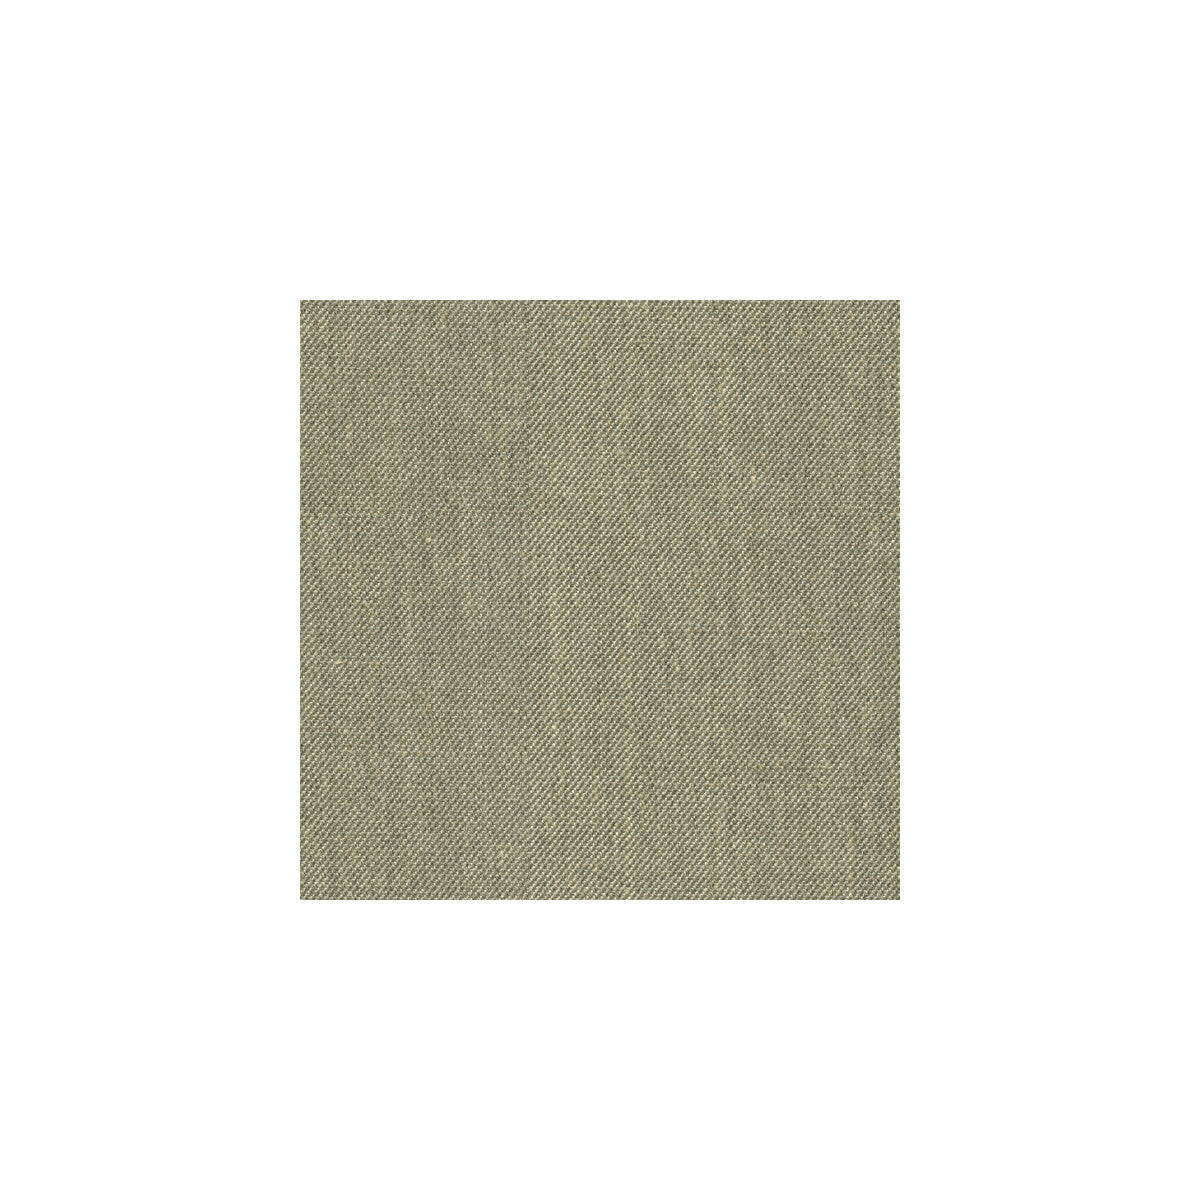 Kravet Smart fabric in 32961-11 color - pattern 32961.11.0 - by Kravet Smart